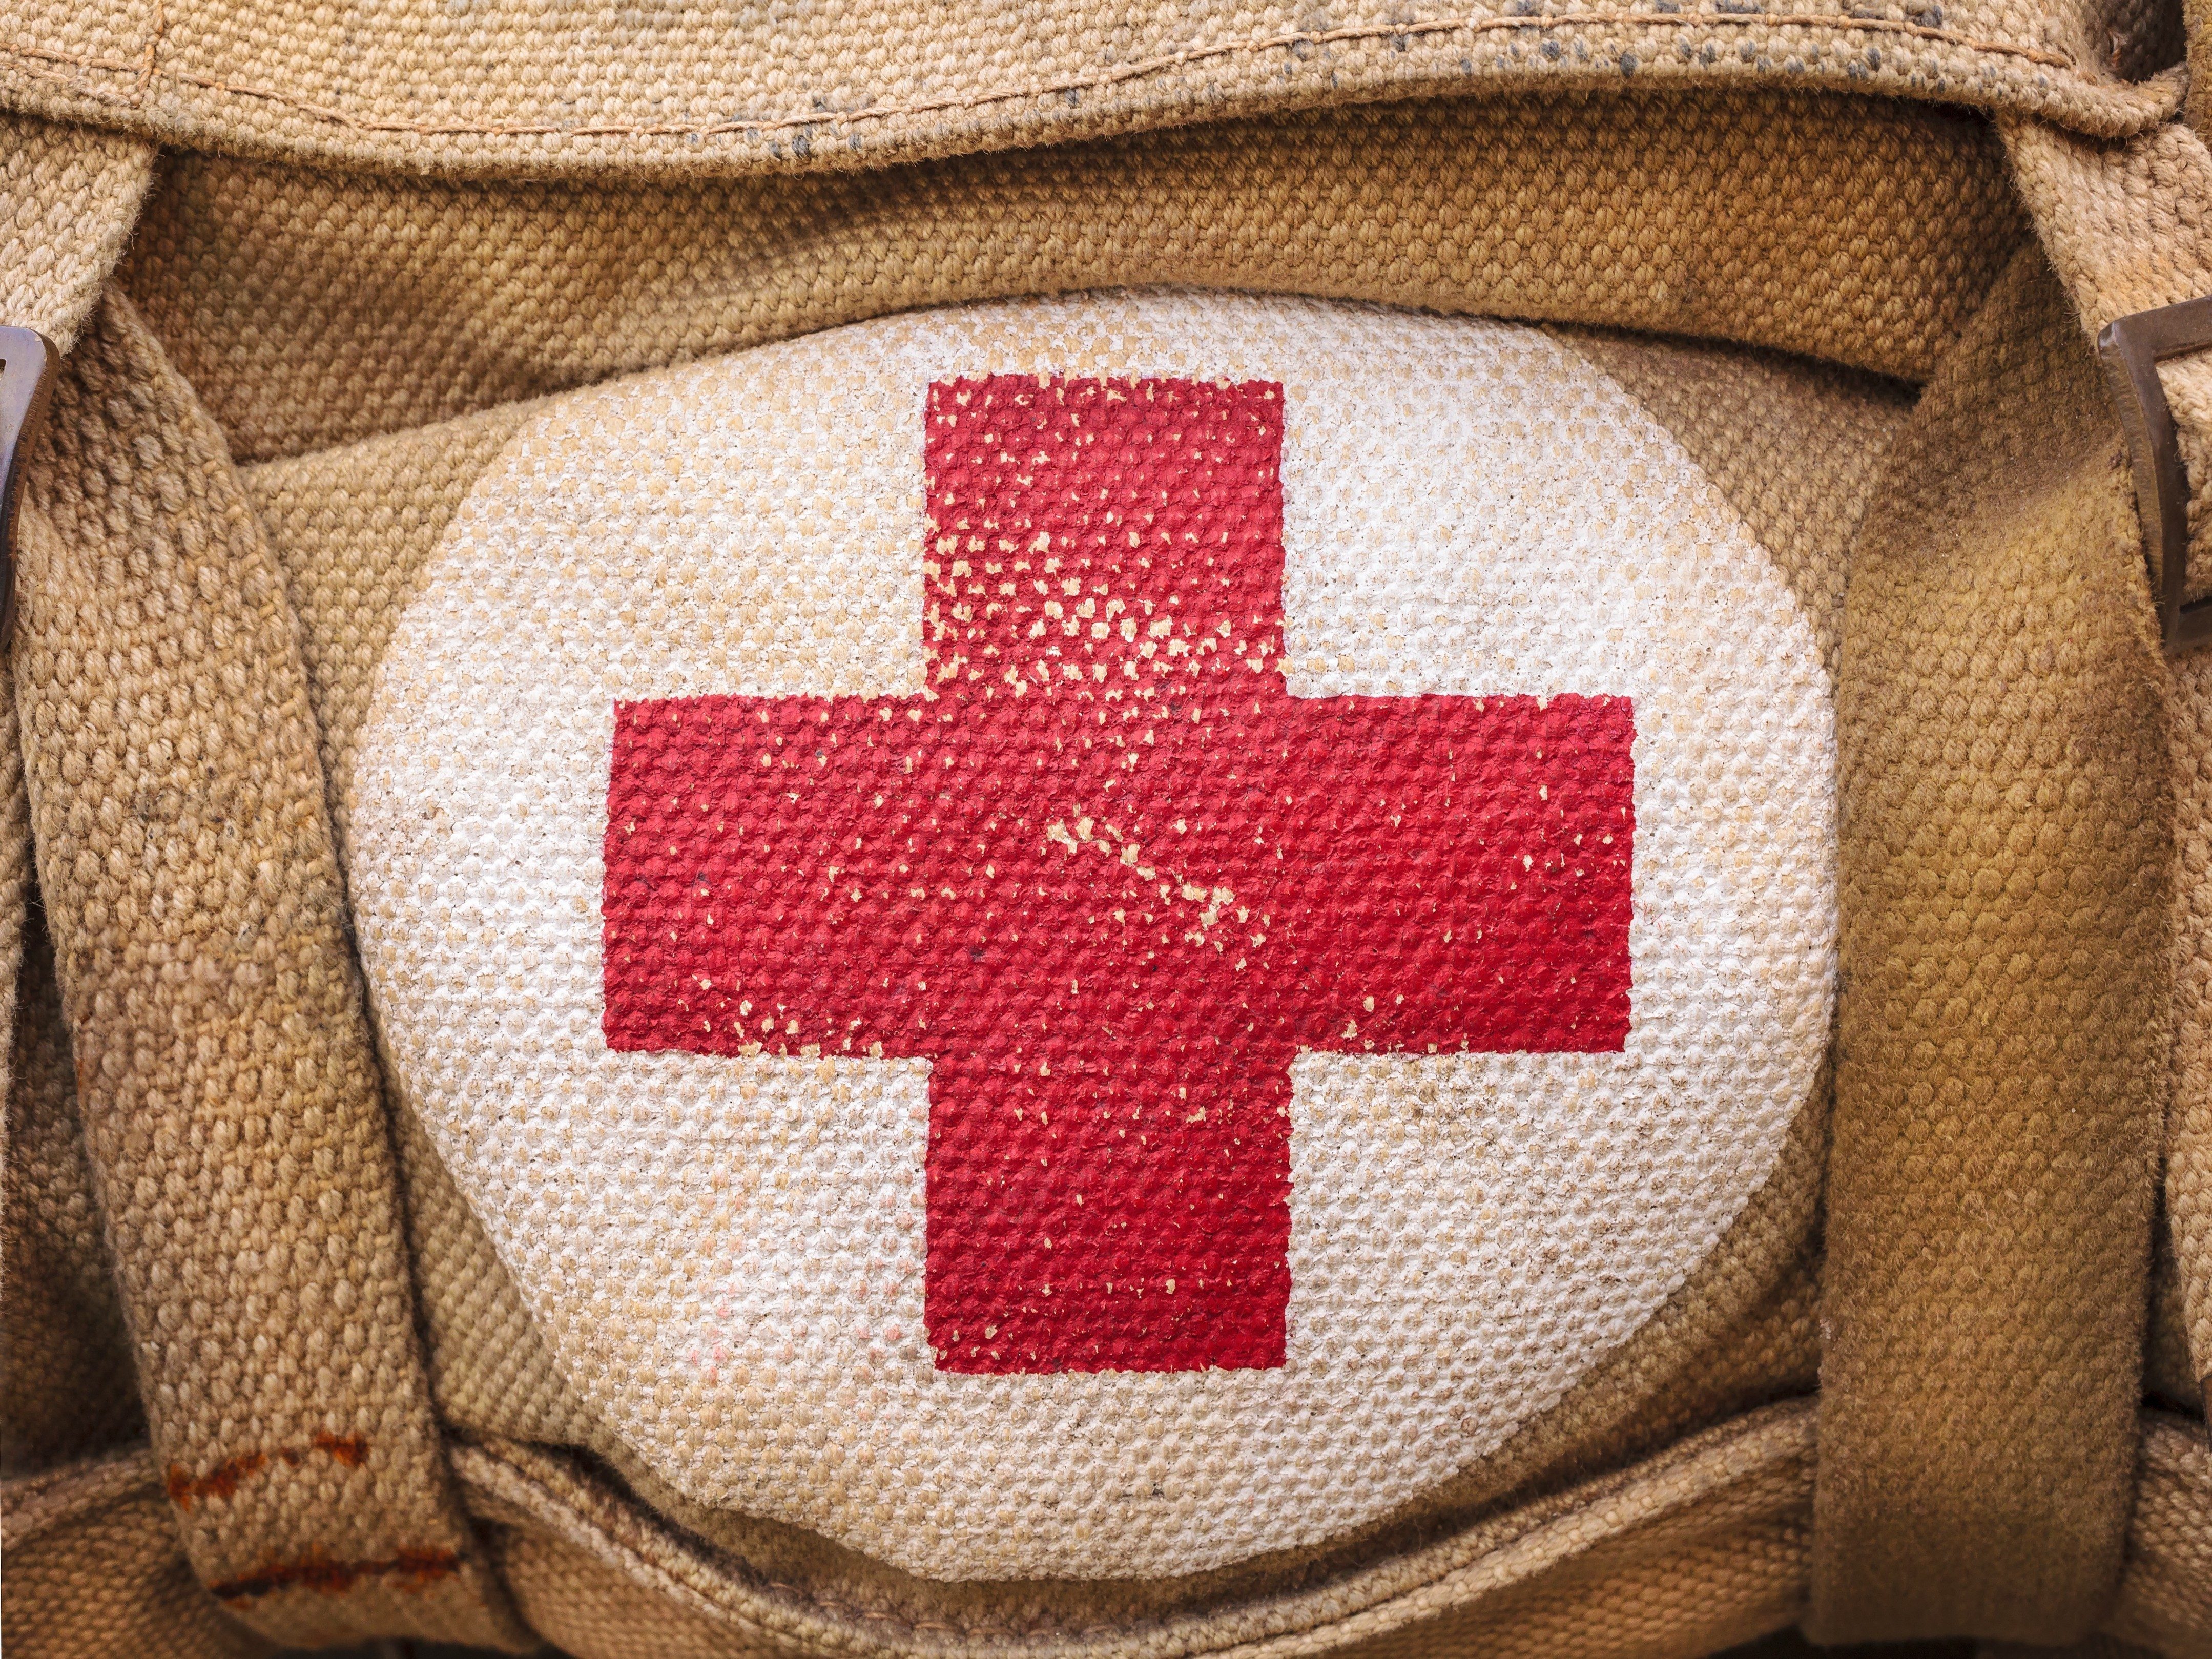 medical aid symbol on a vintage jute army bag